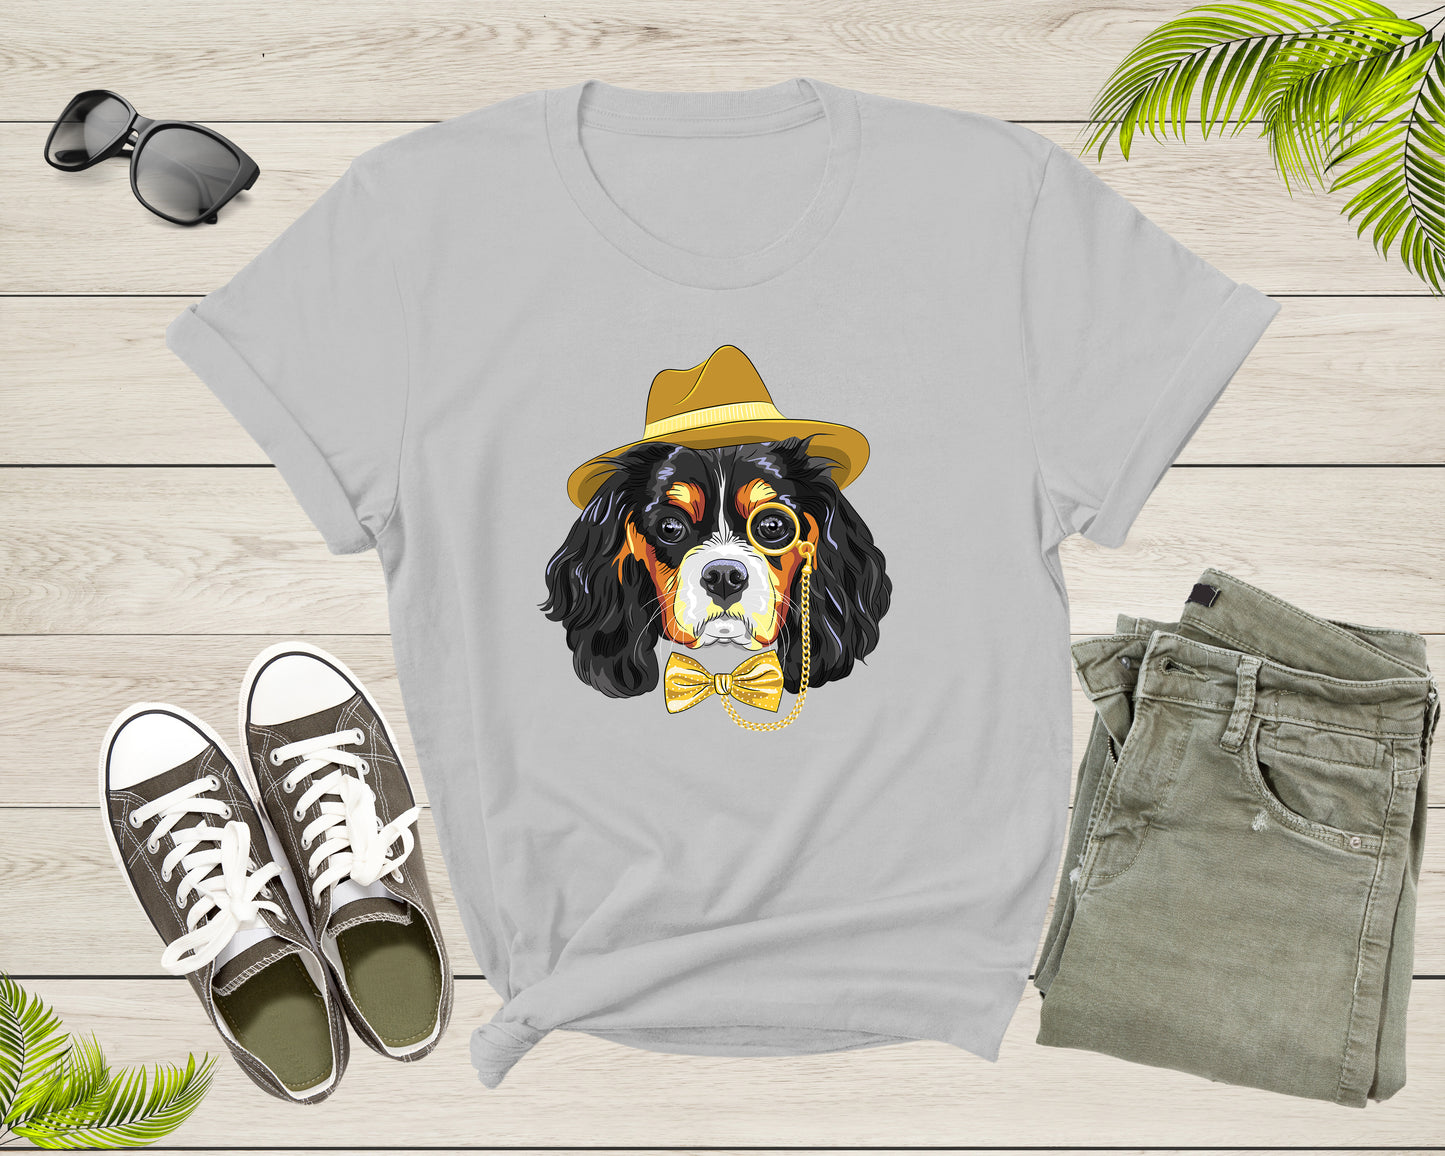 Pet Dog Doggie Puppy Animal Wearing Yellow Ribbon and Hat T-Shirt Dog Puppy Lover Owner Gift T Shirt for Men Women Kids Boys Girls Tshirt